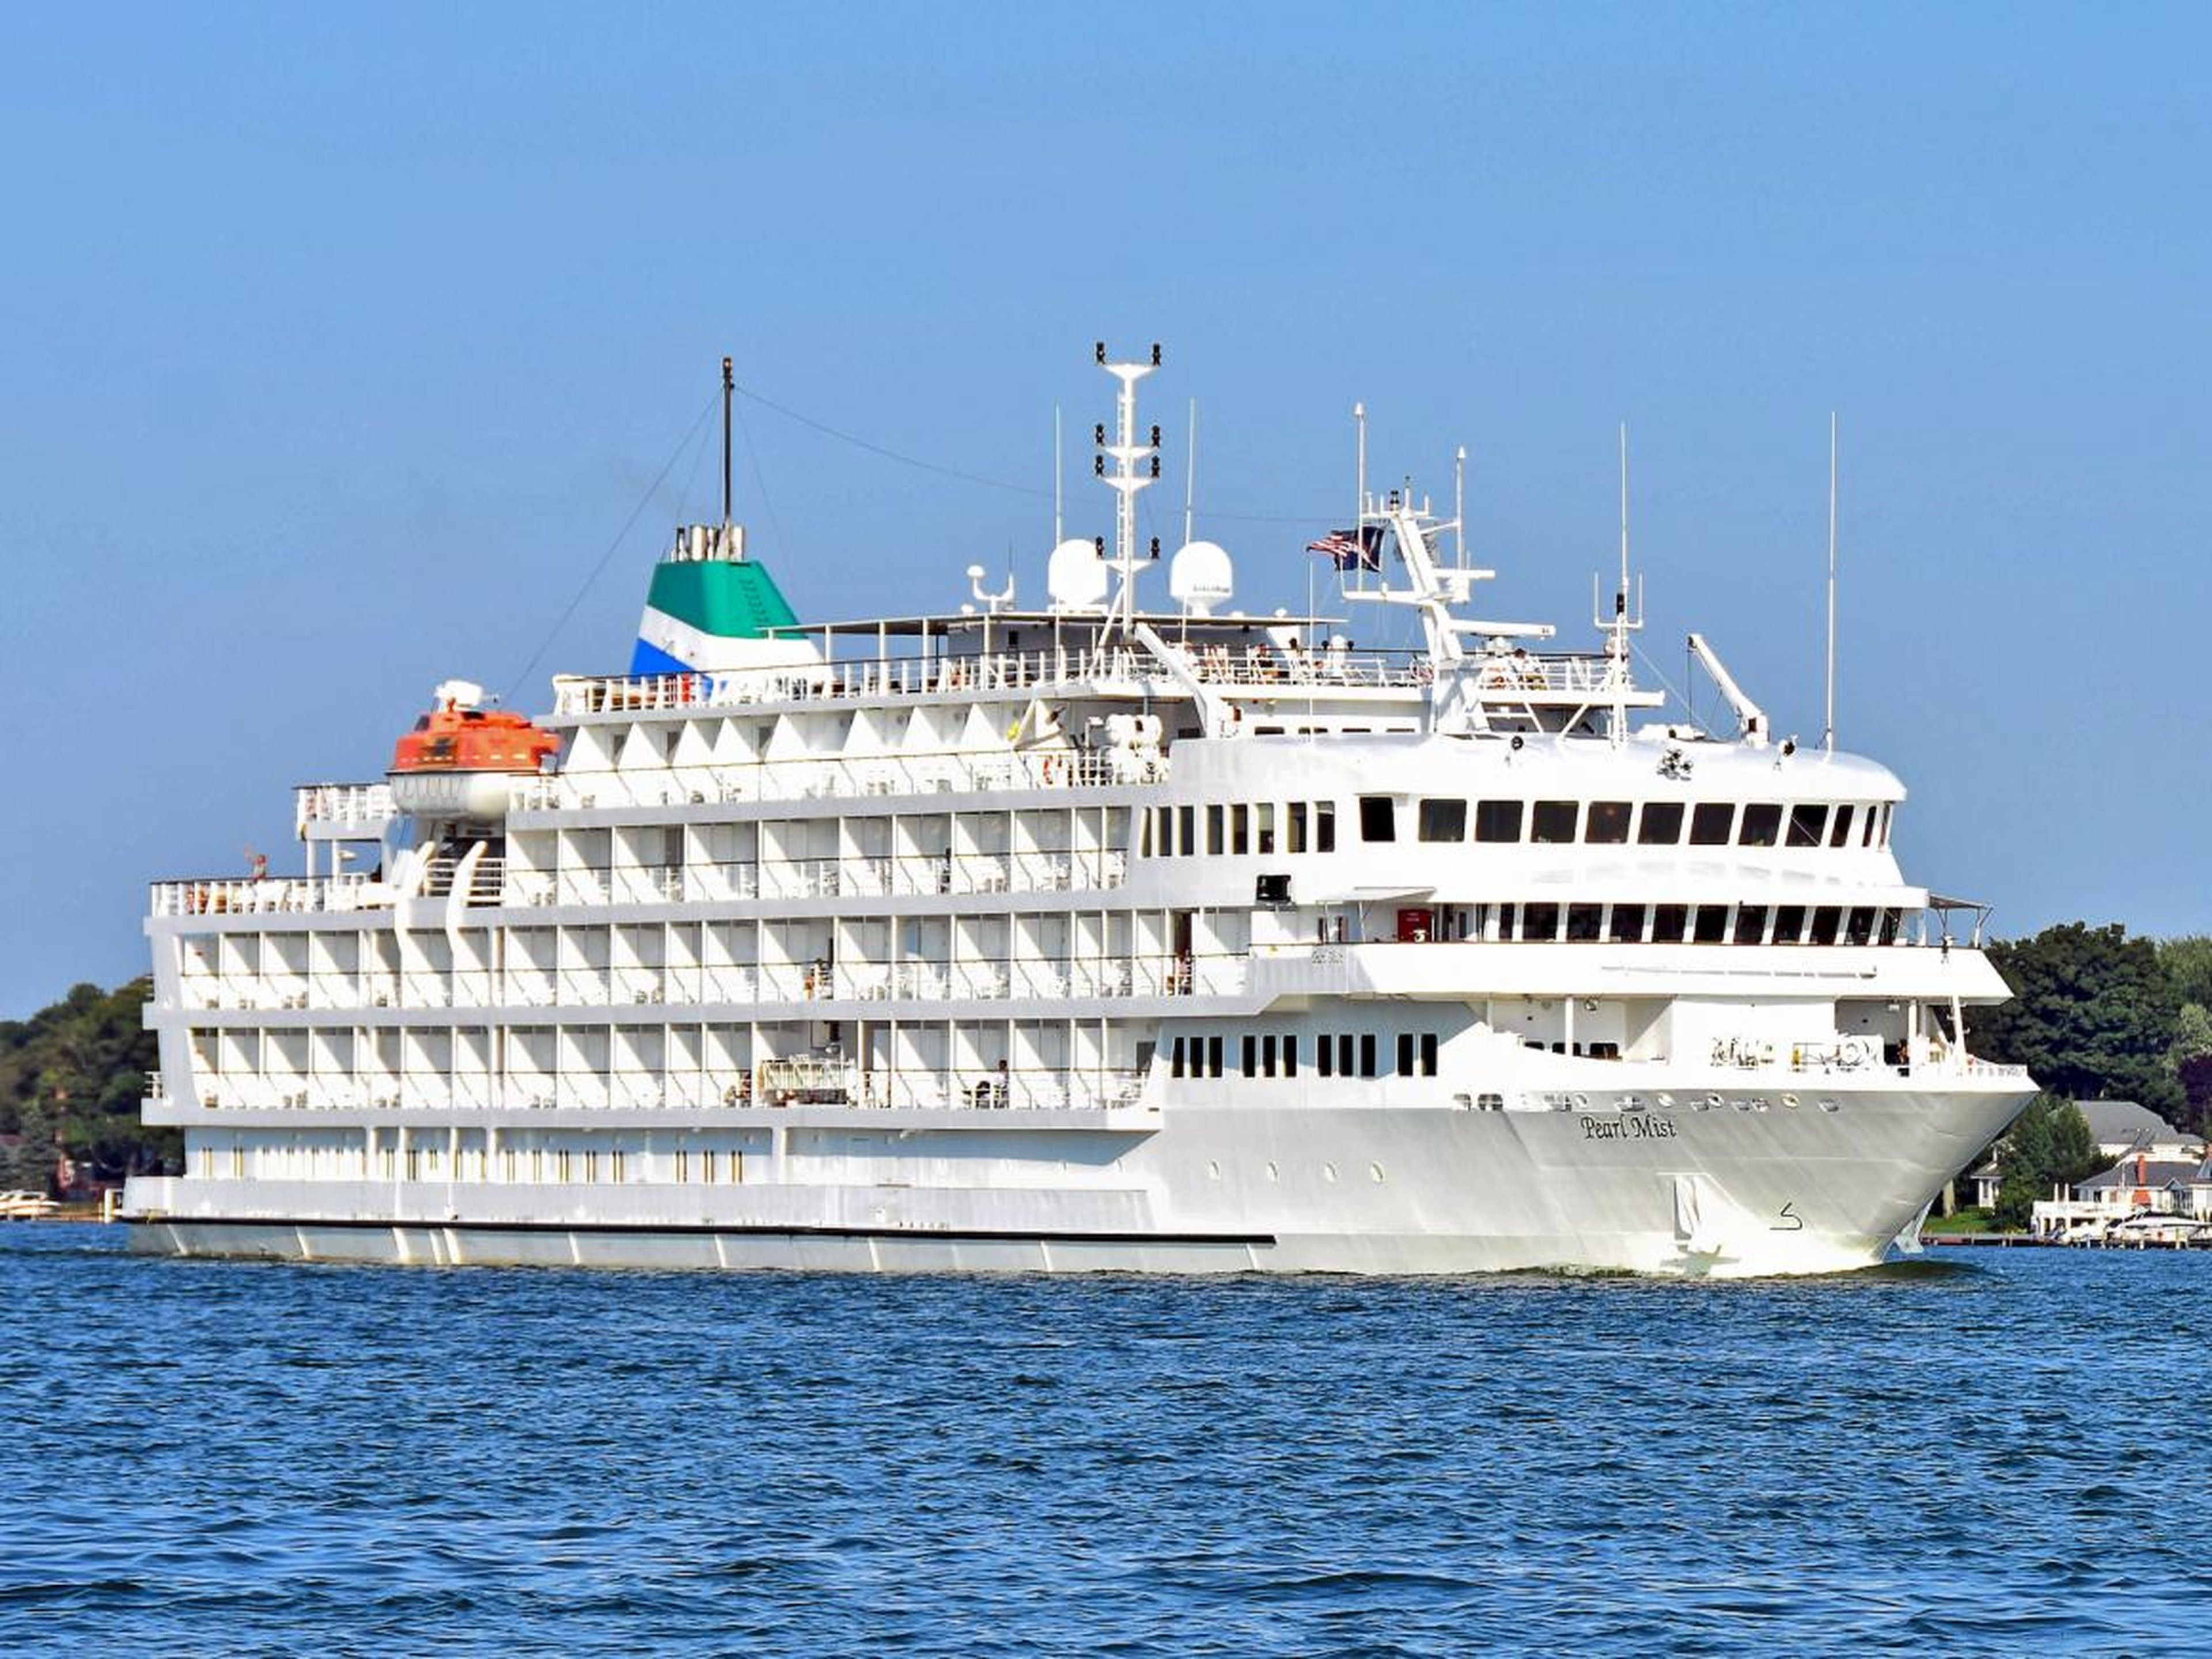 The Pearl Mist cruise ship.